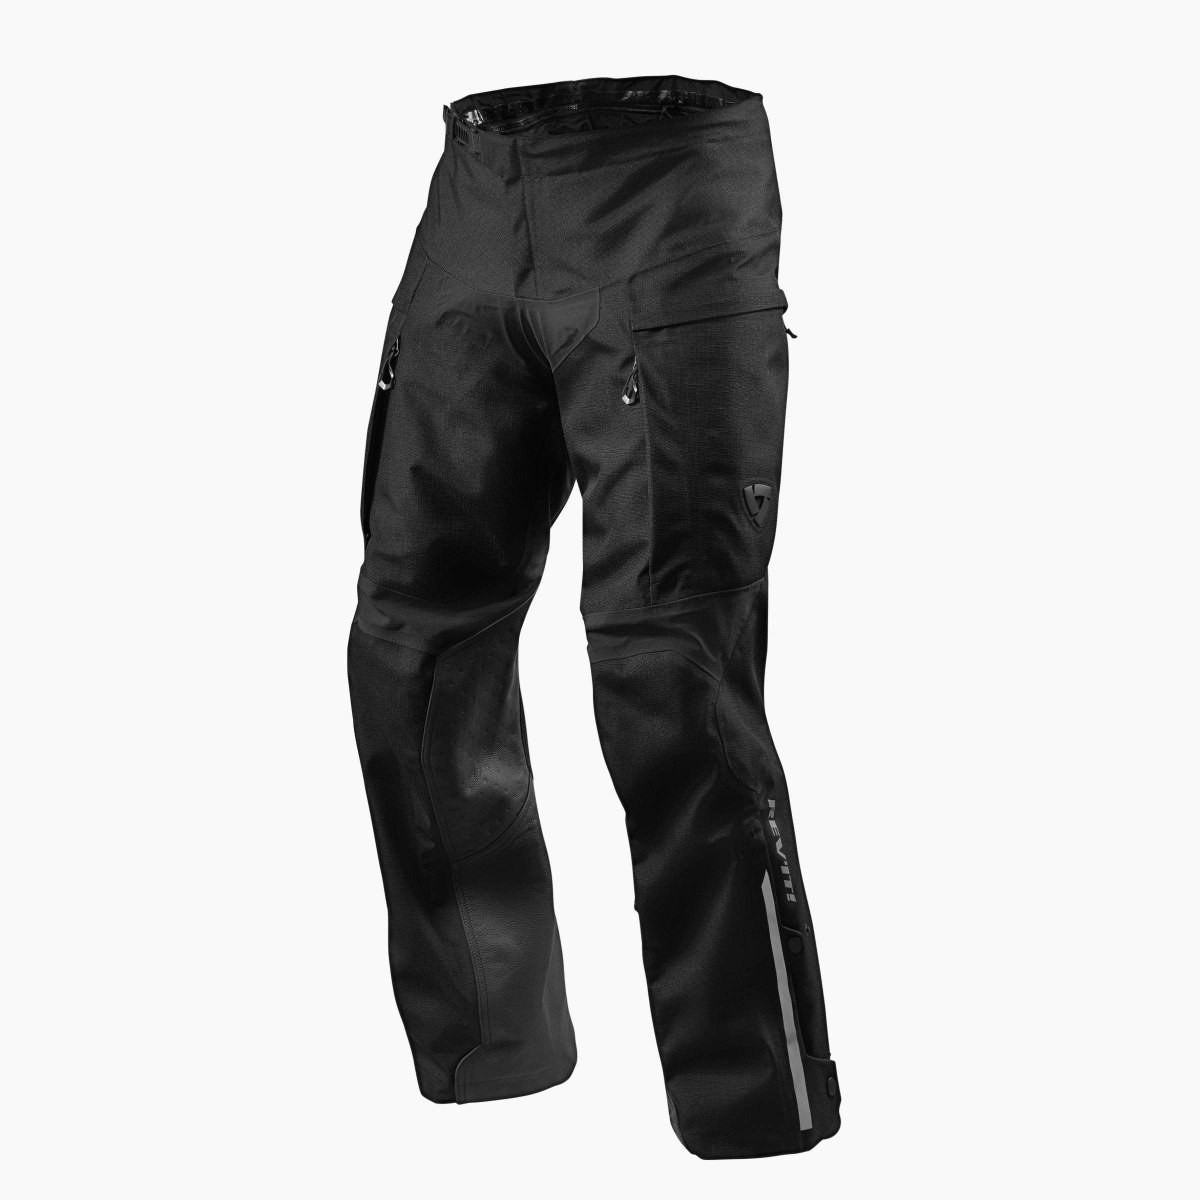 Image of REV'IT! Component H2O Long Black Motorcycle Pants Size XL EN